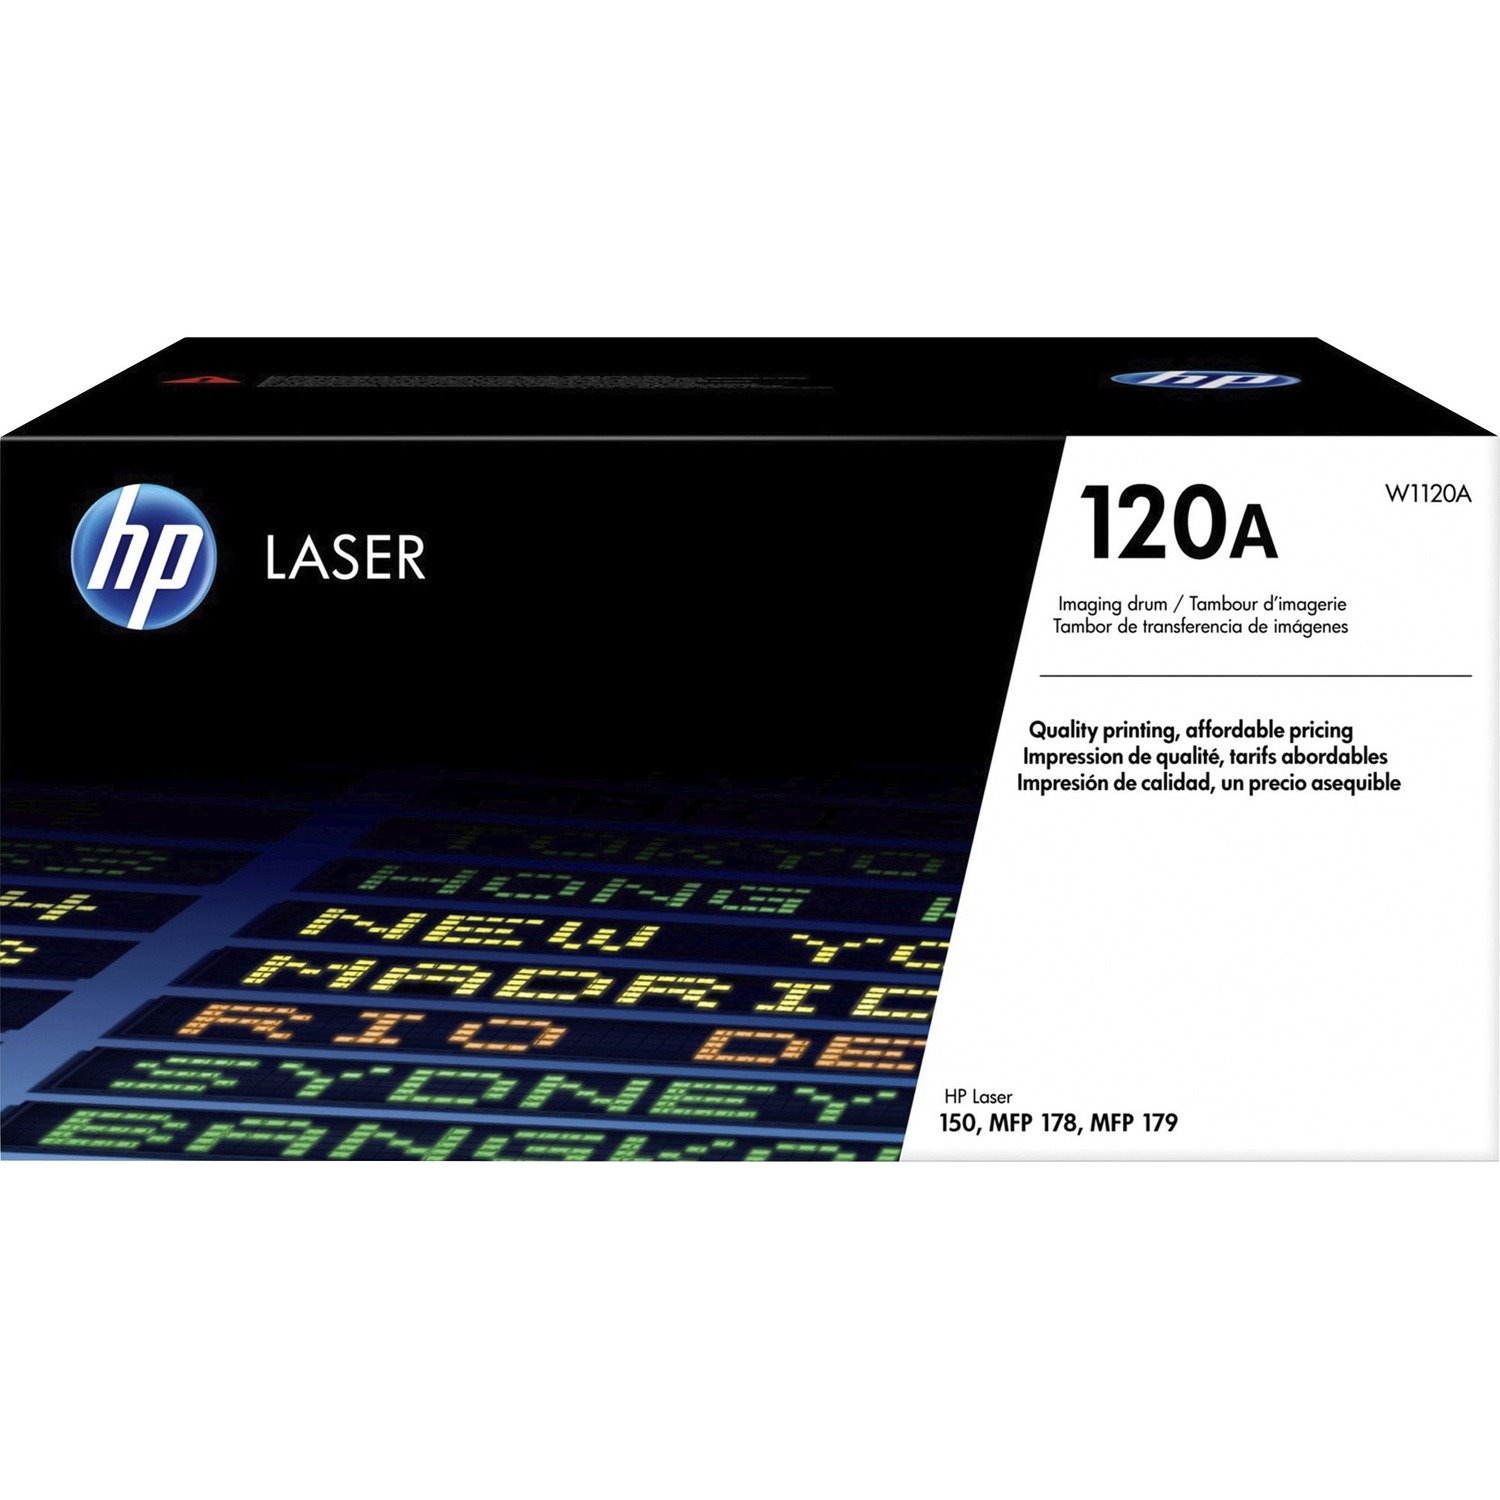 HP 120A Laser Imaging Drum for Printer - Original - Colour